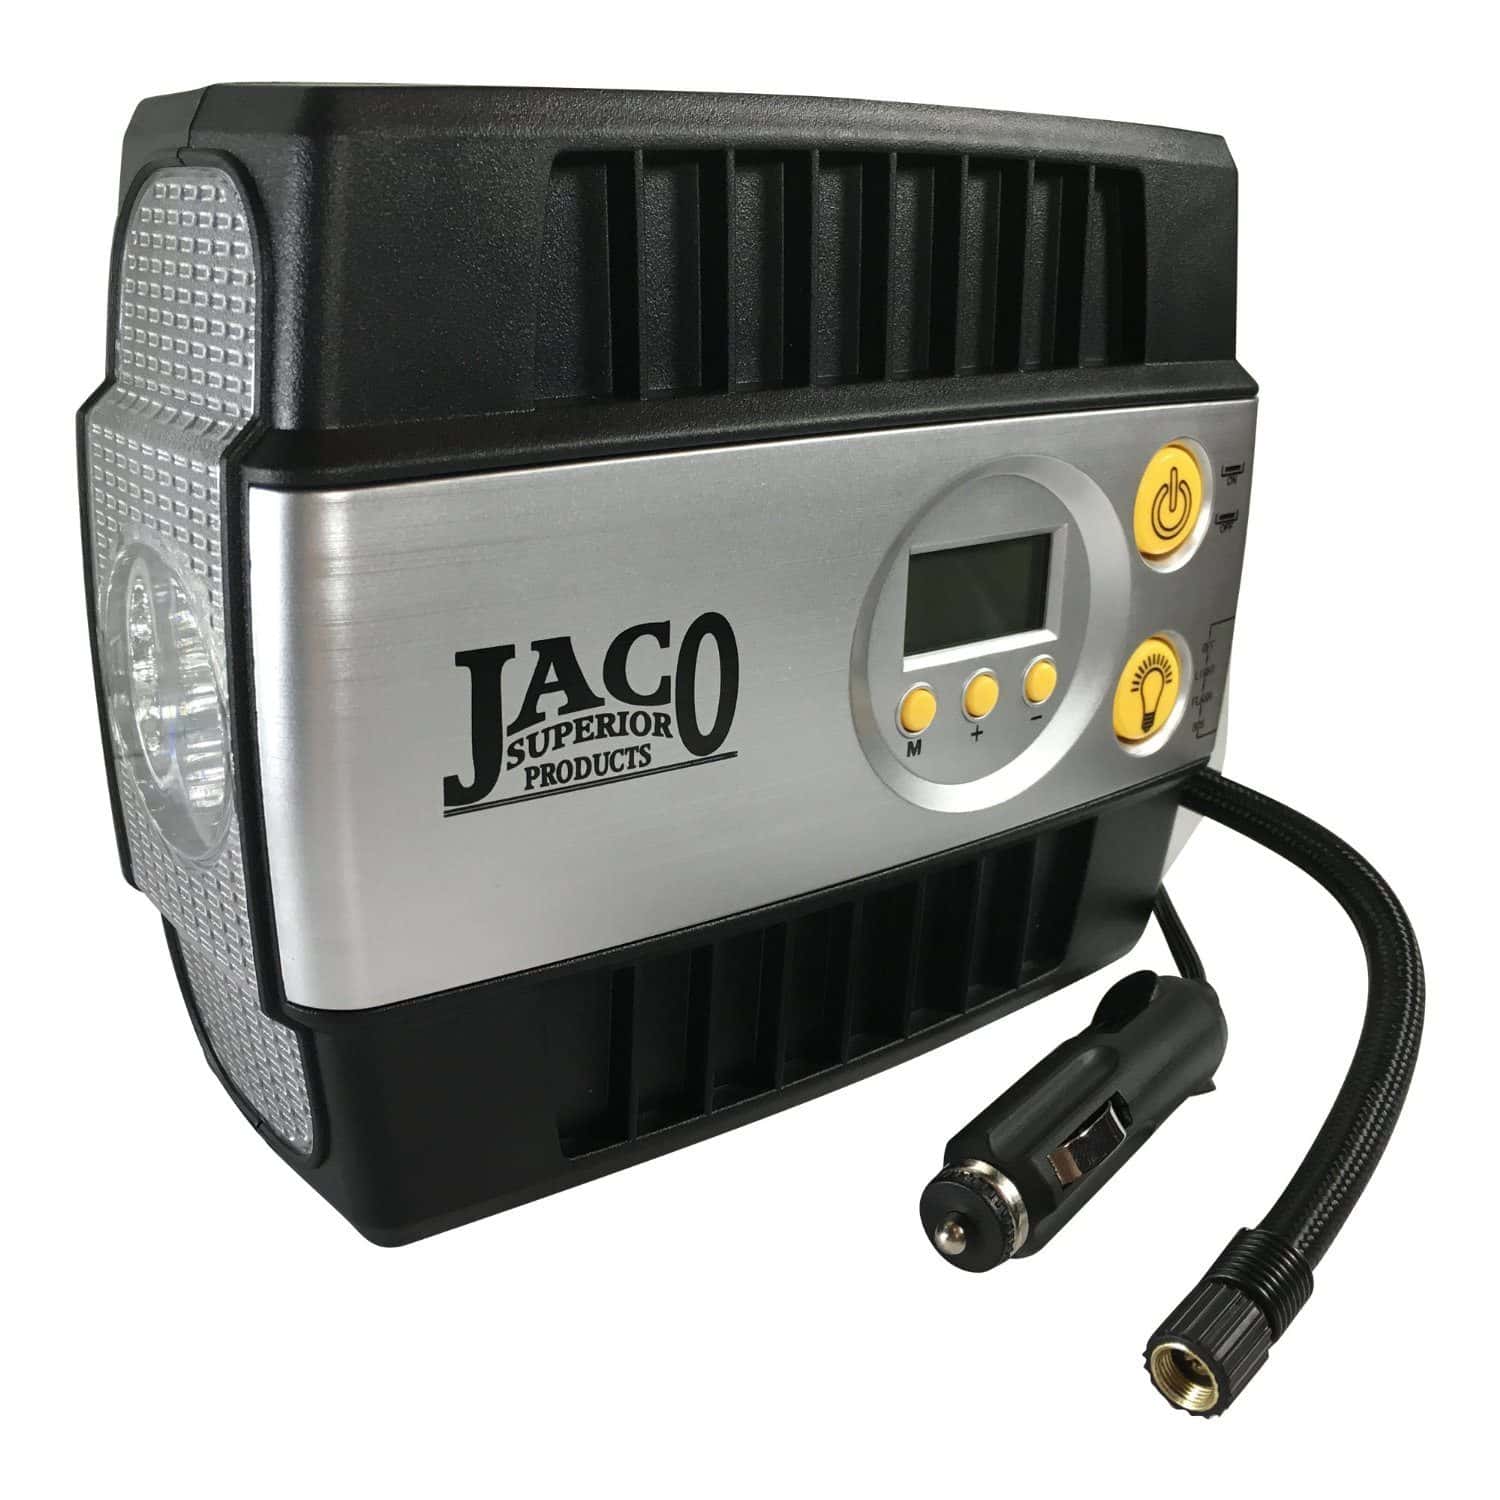 JACO Premium Digital Tire Inflator, 100 PSI